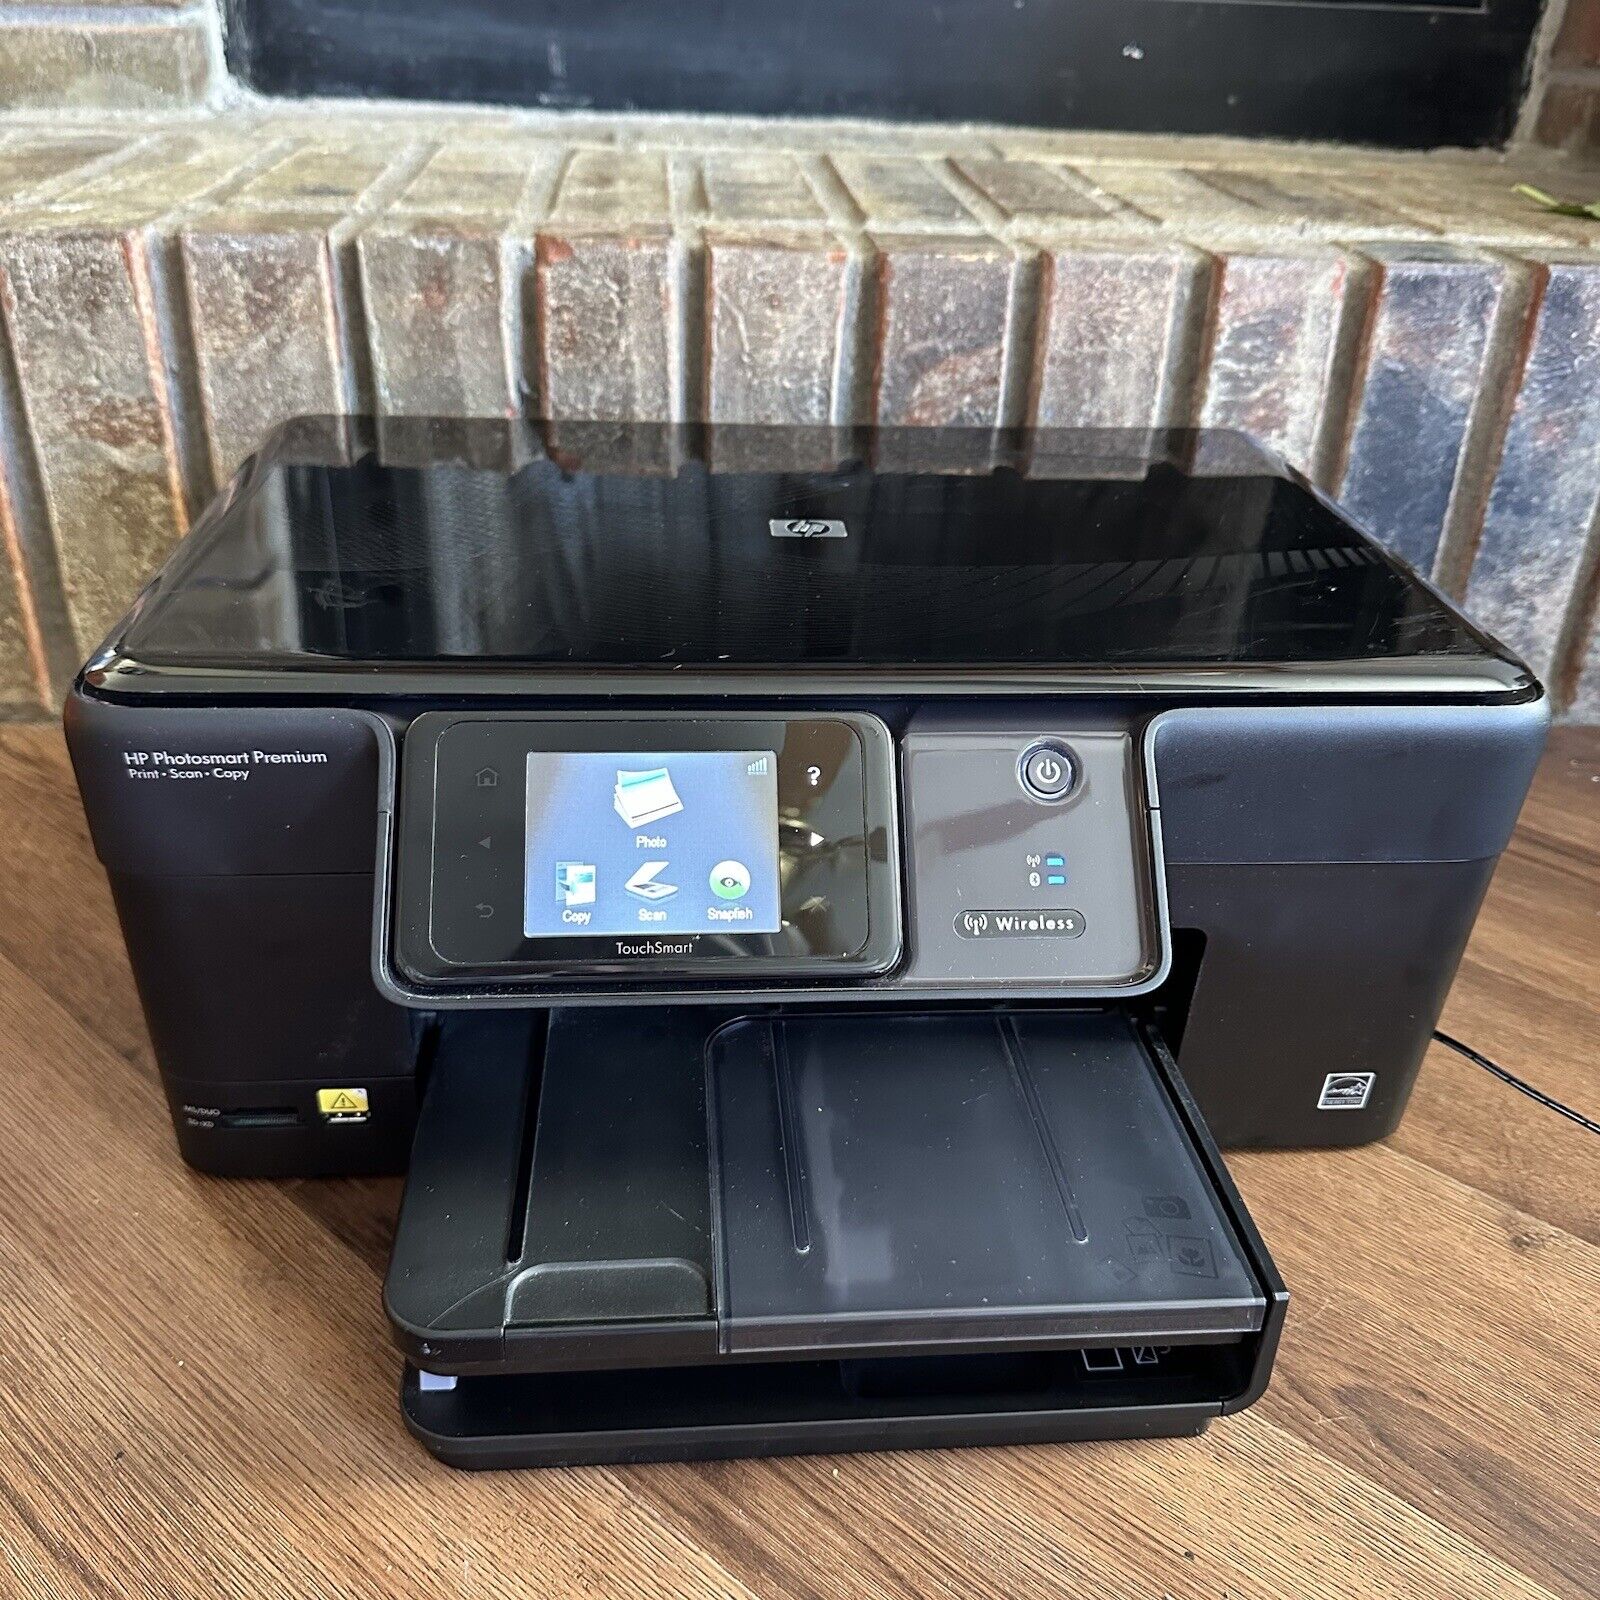 HP Photosmart Premium All-In-One Inkjet Printer